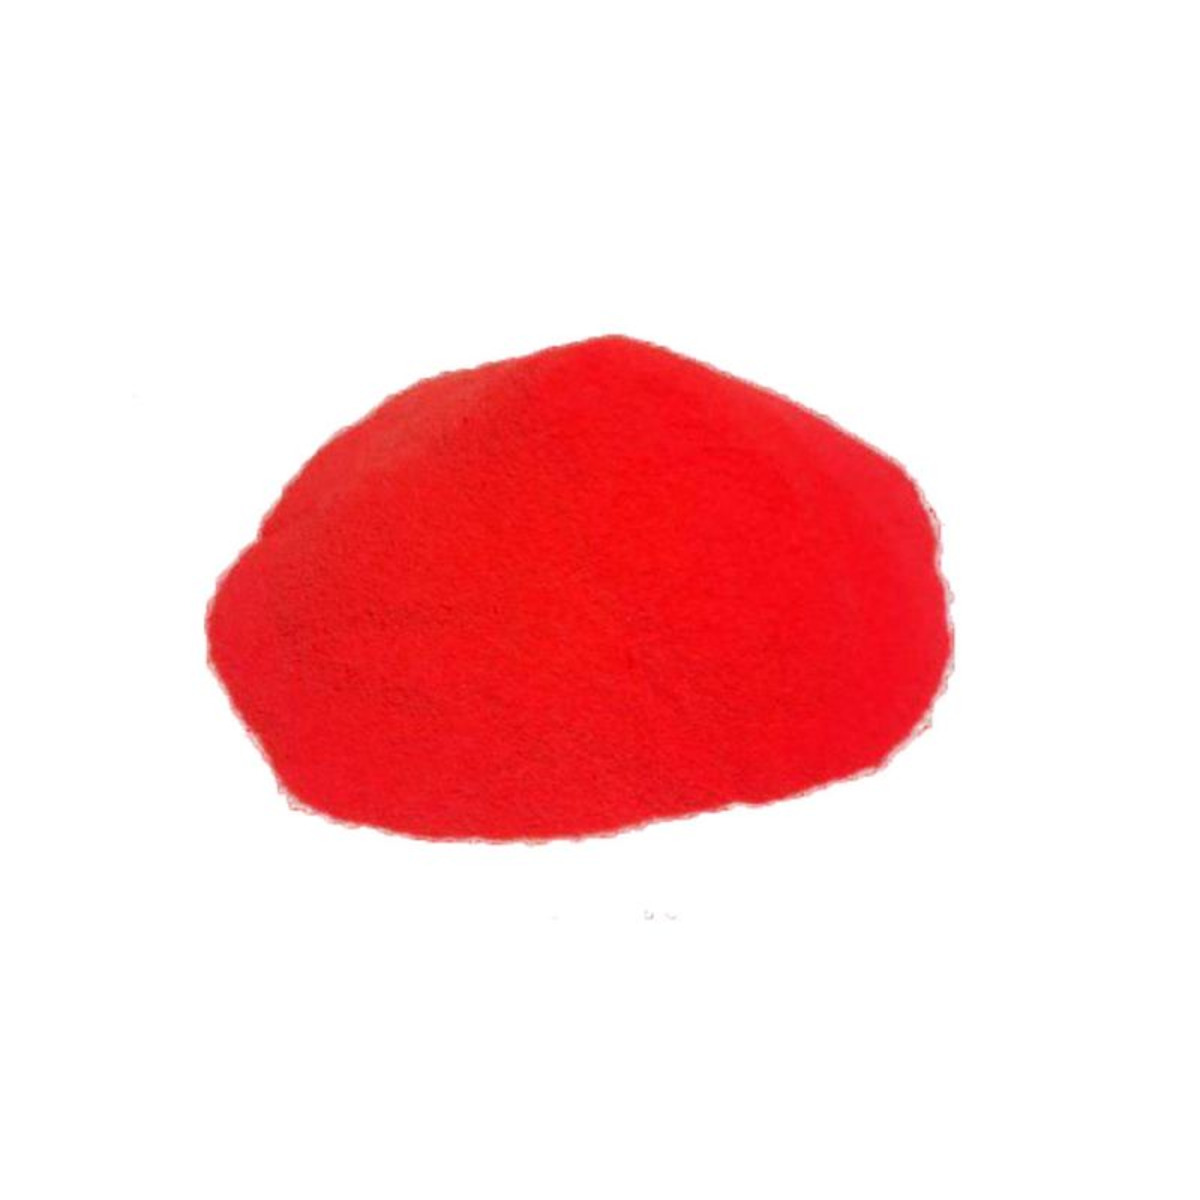 M2 Fishing Plastgum Powder Plasticizer For Ballast -  Phosphorescent Red - 100 g        